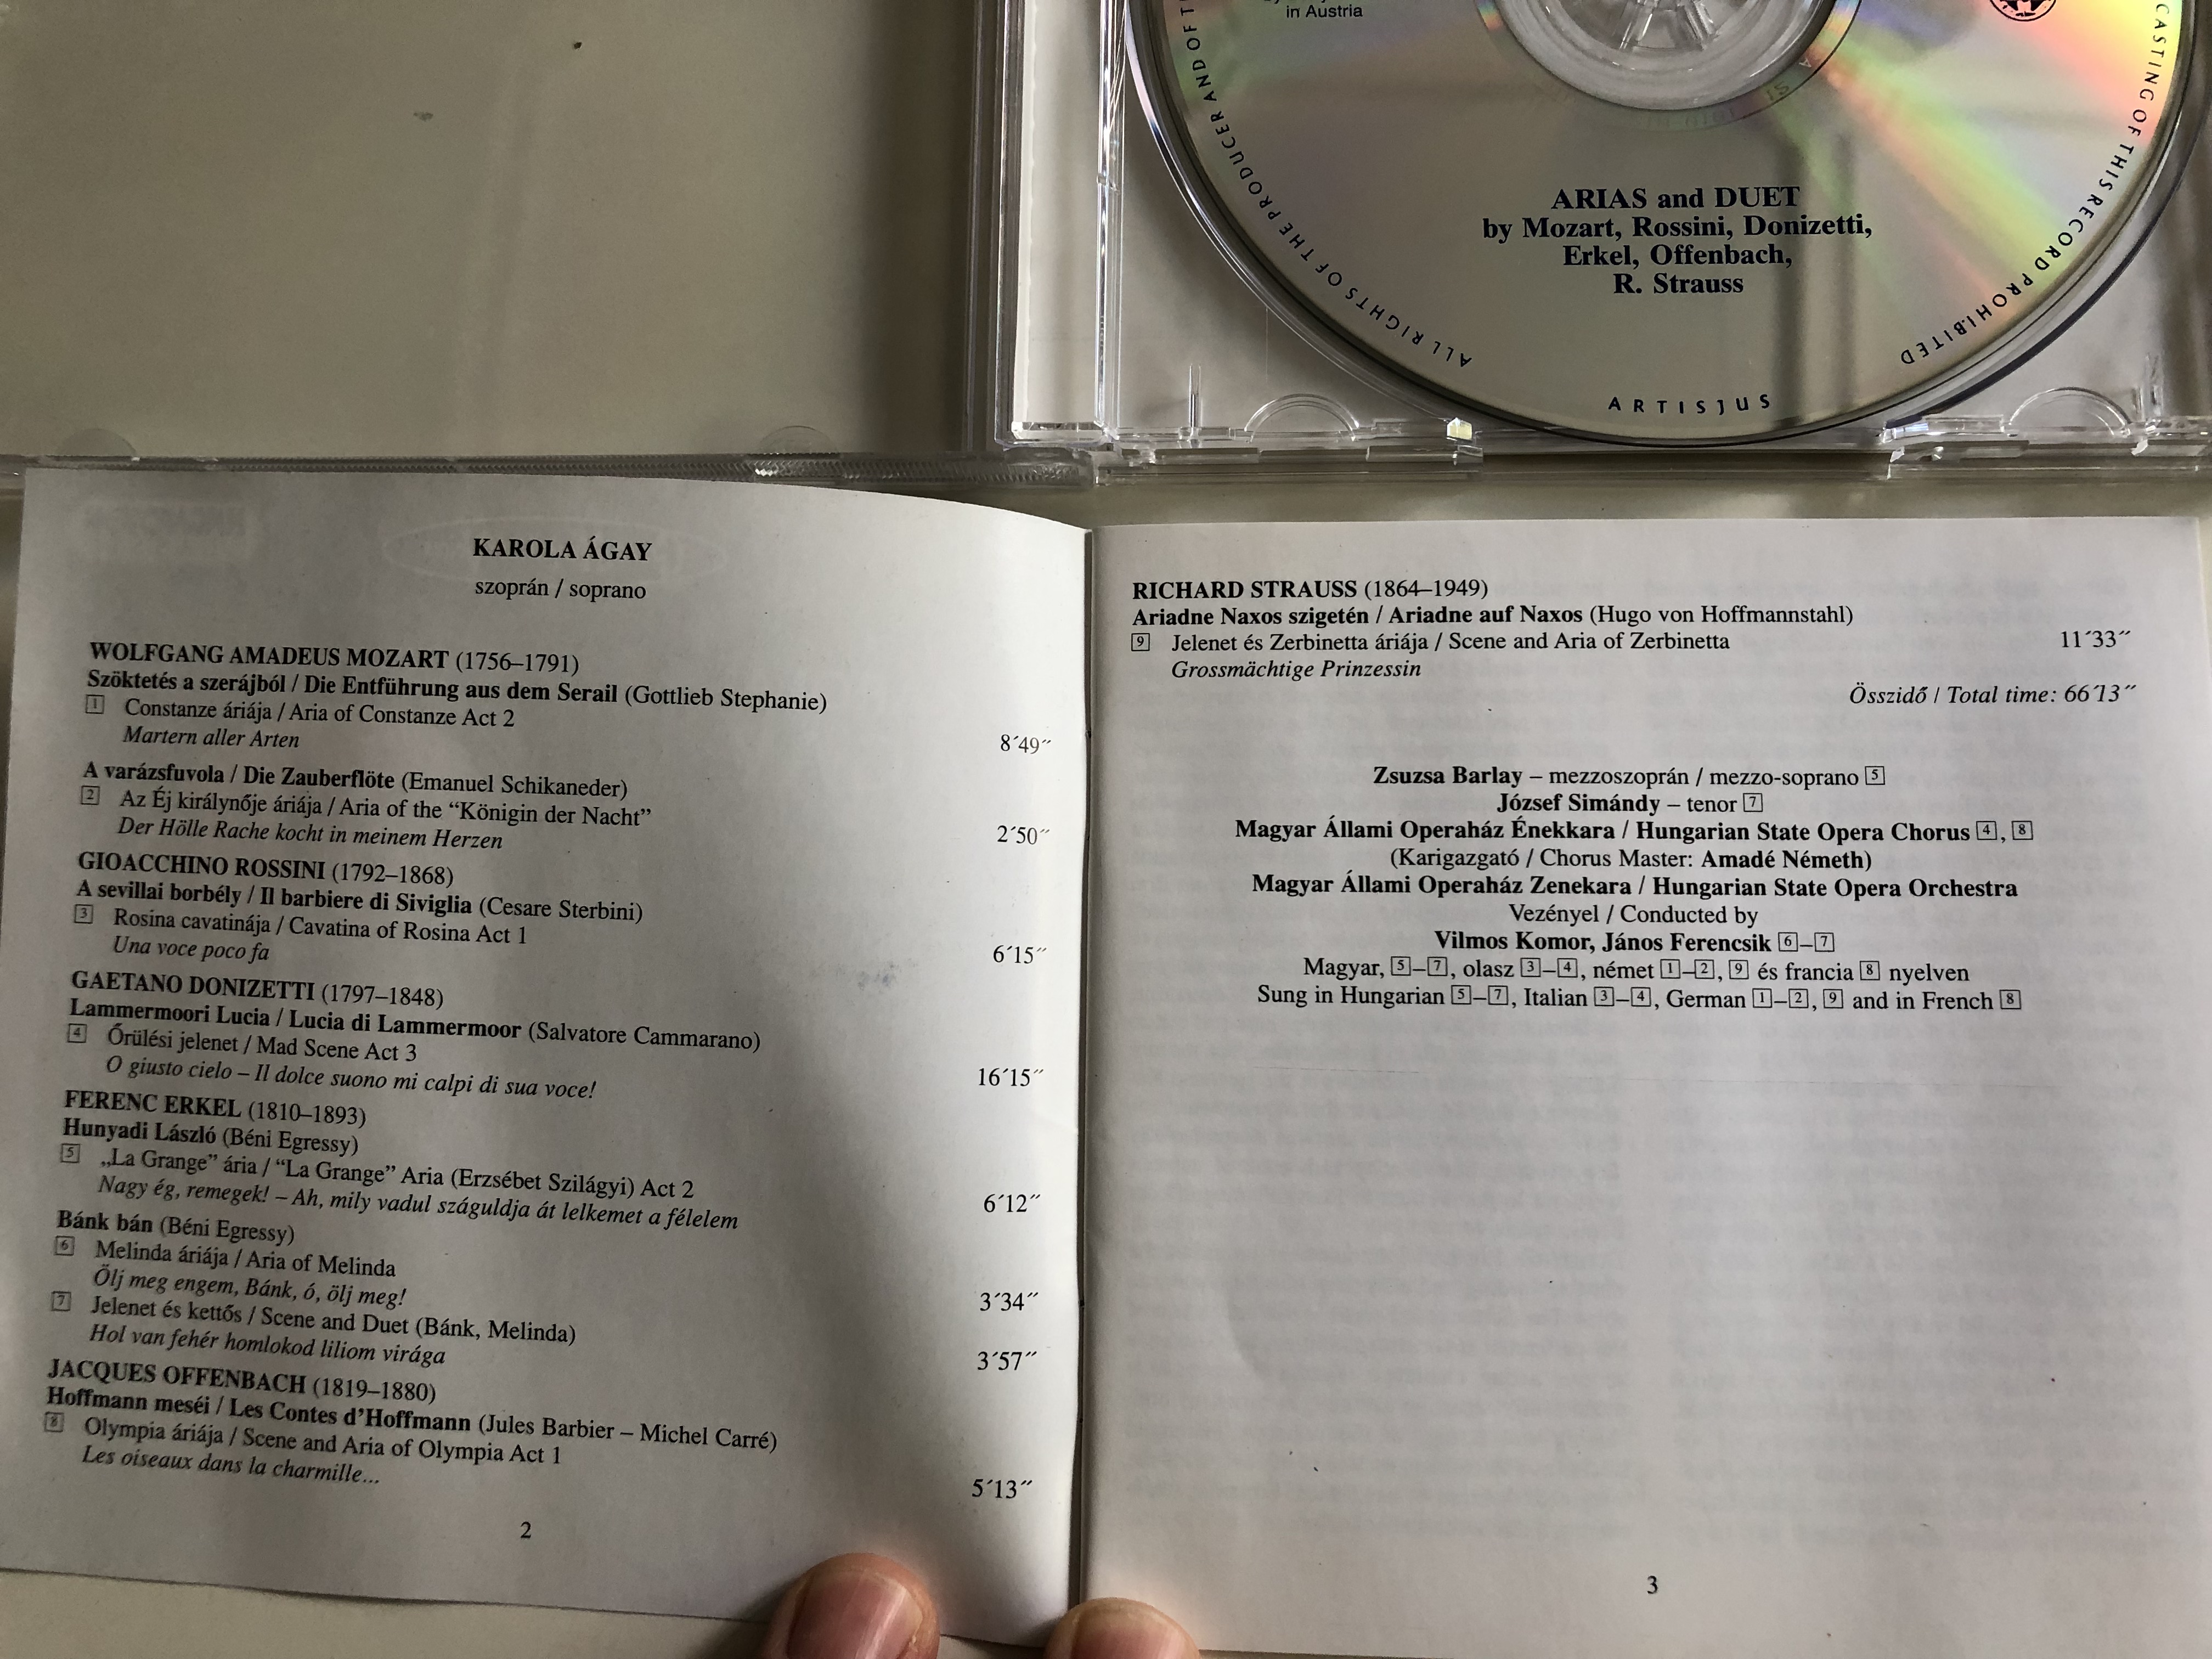 karola-agay-soprano-mozart-rossini-donizetti-offenbach-r.strauss-hungaroton-audio-cd-stereo-1970-hcd-31754-2-.jpg